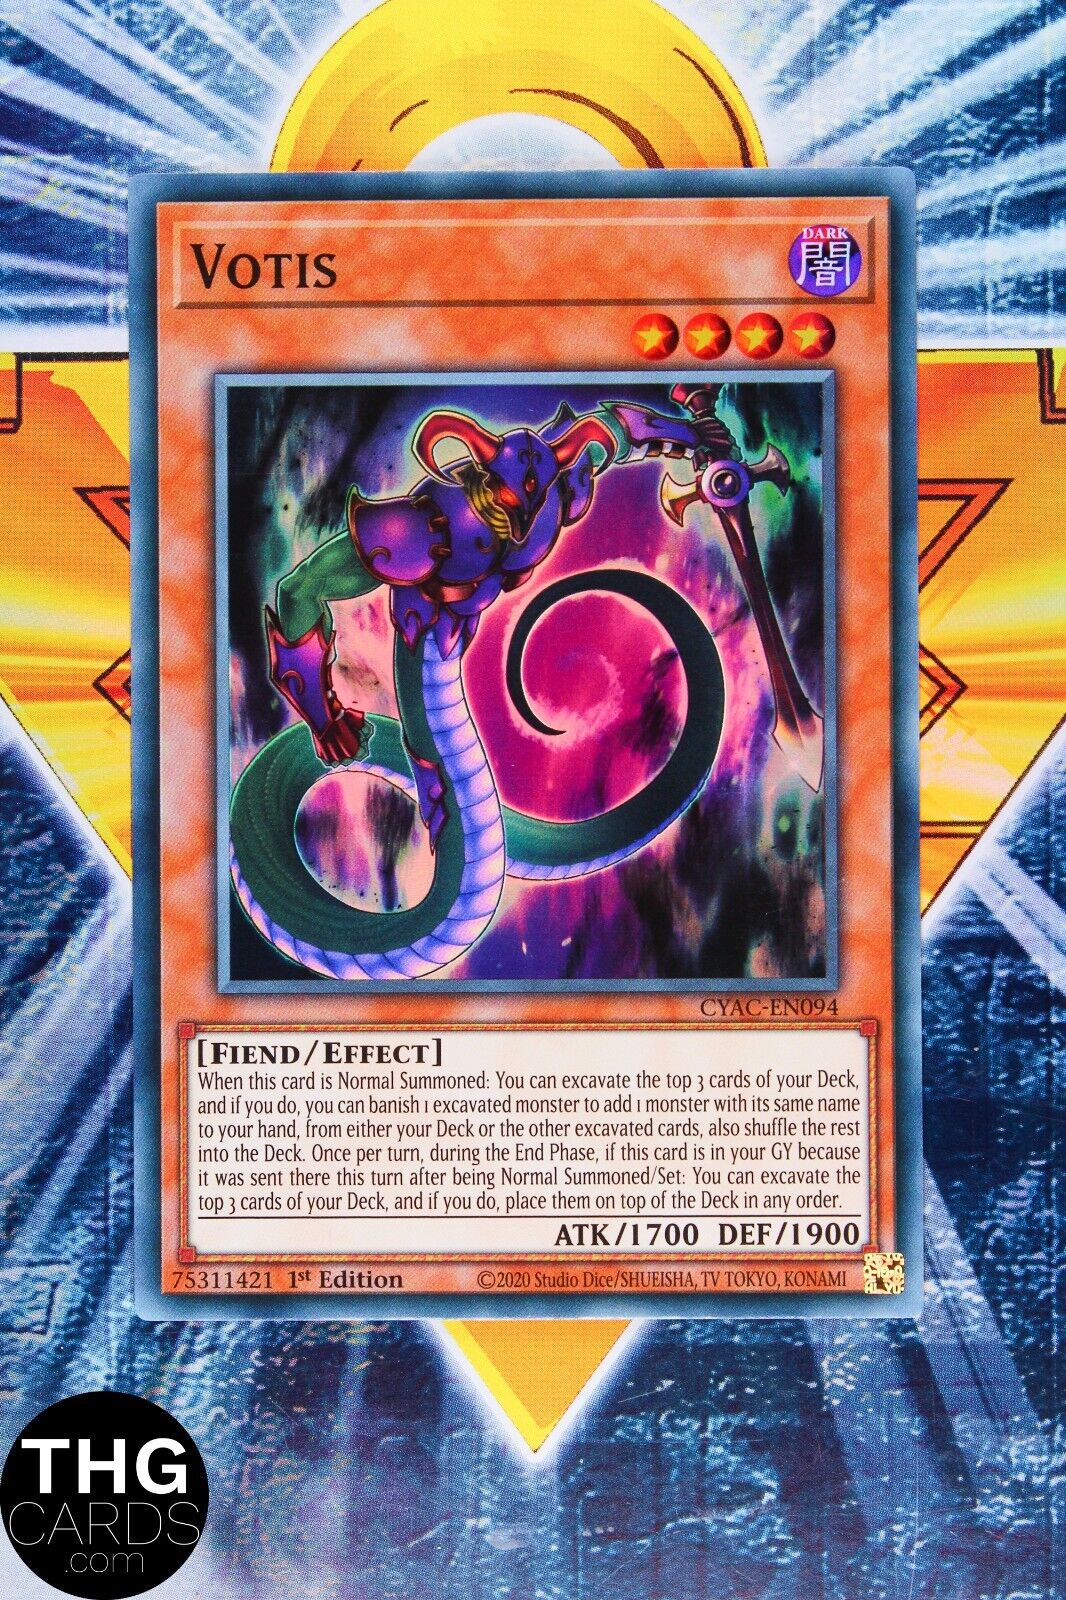 Votis CYAC-EN094 1st Edition Super Rare Yugioh Card